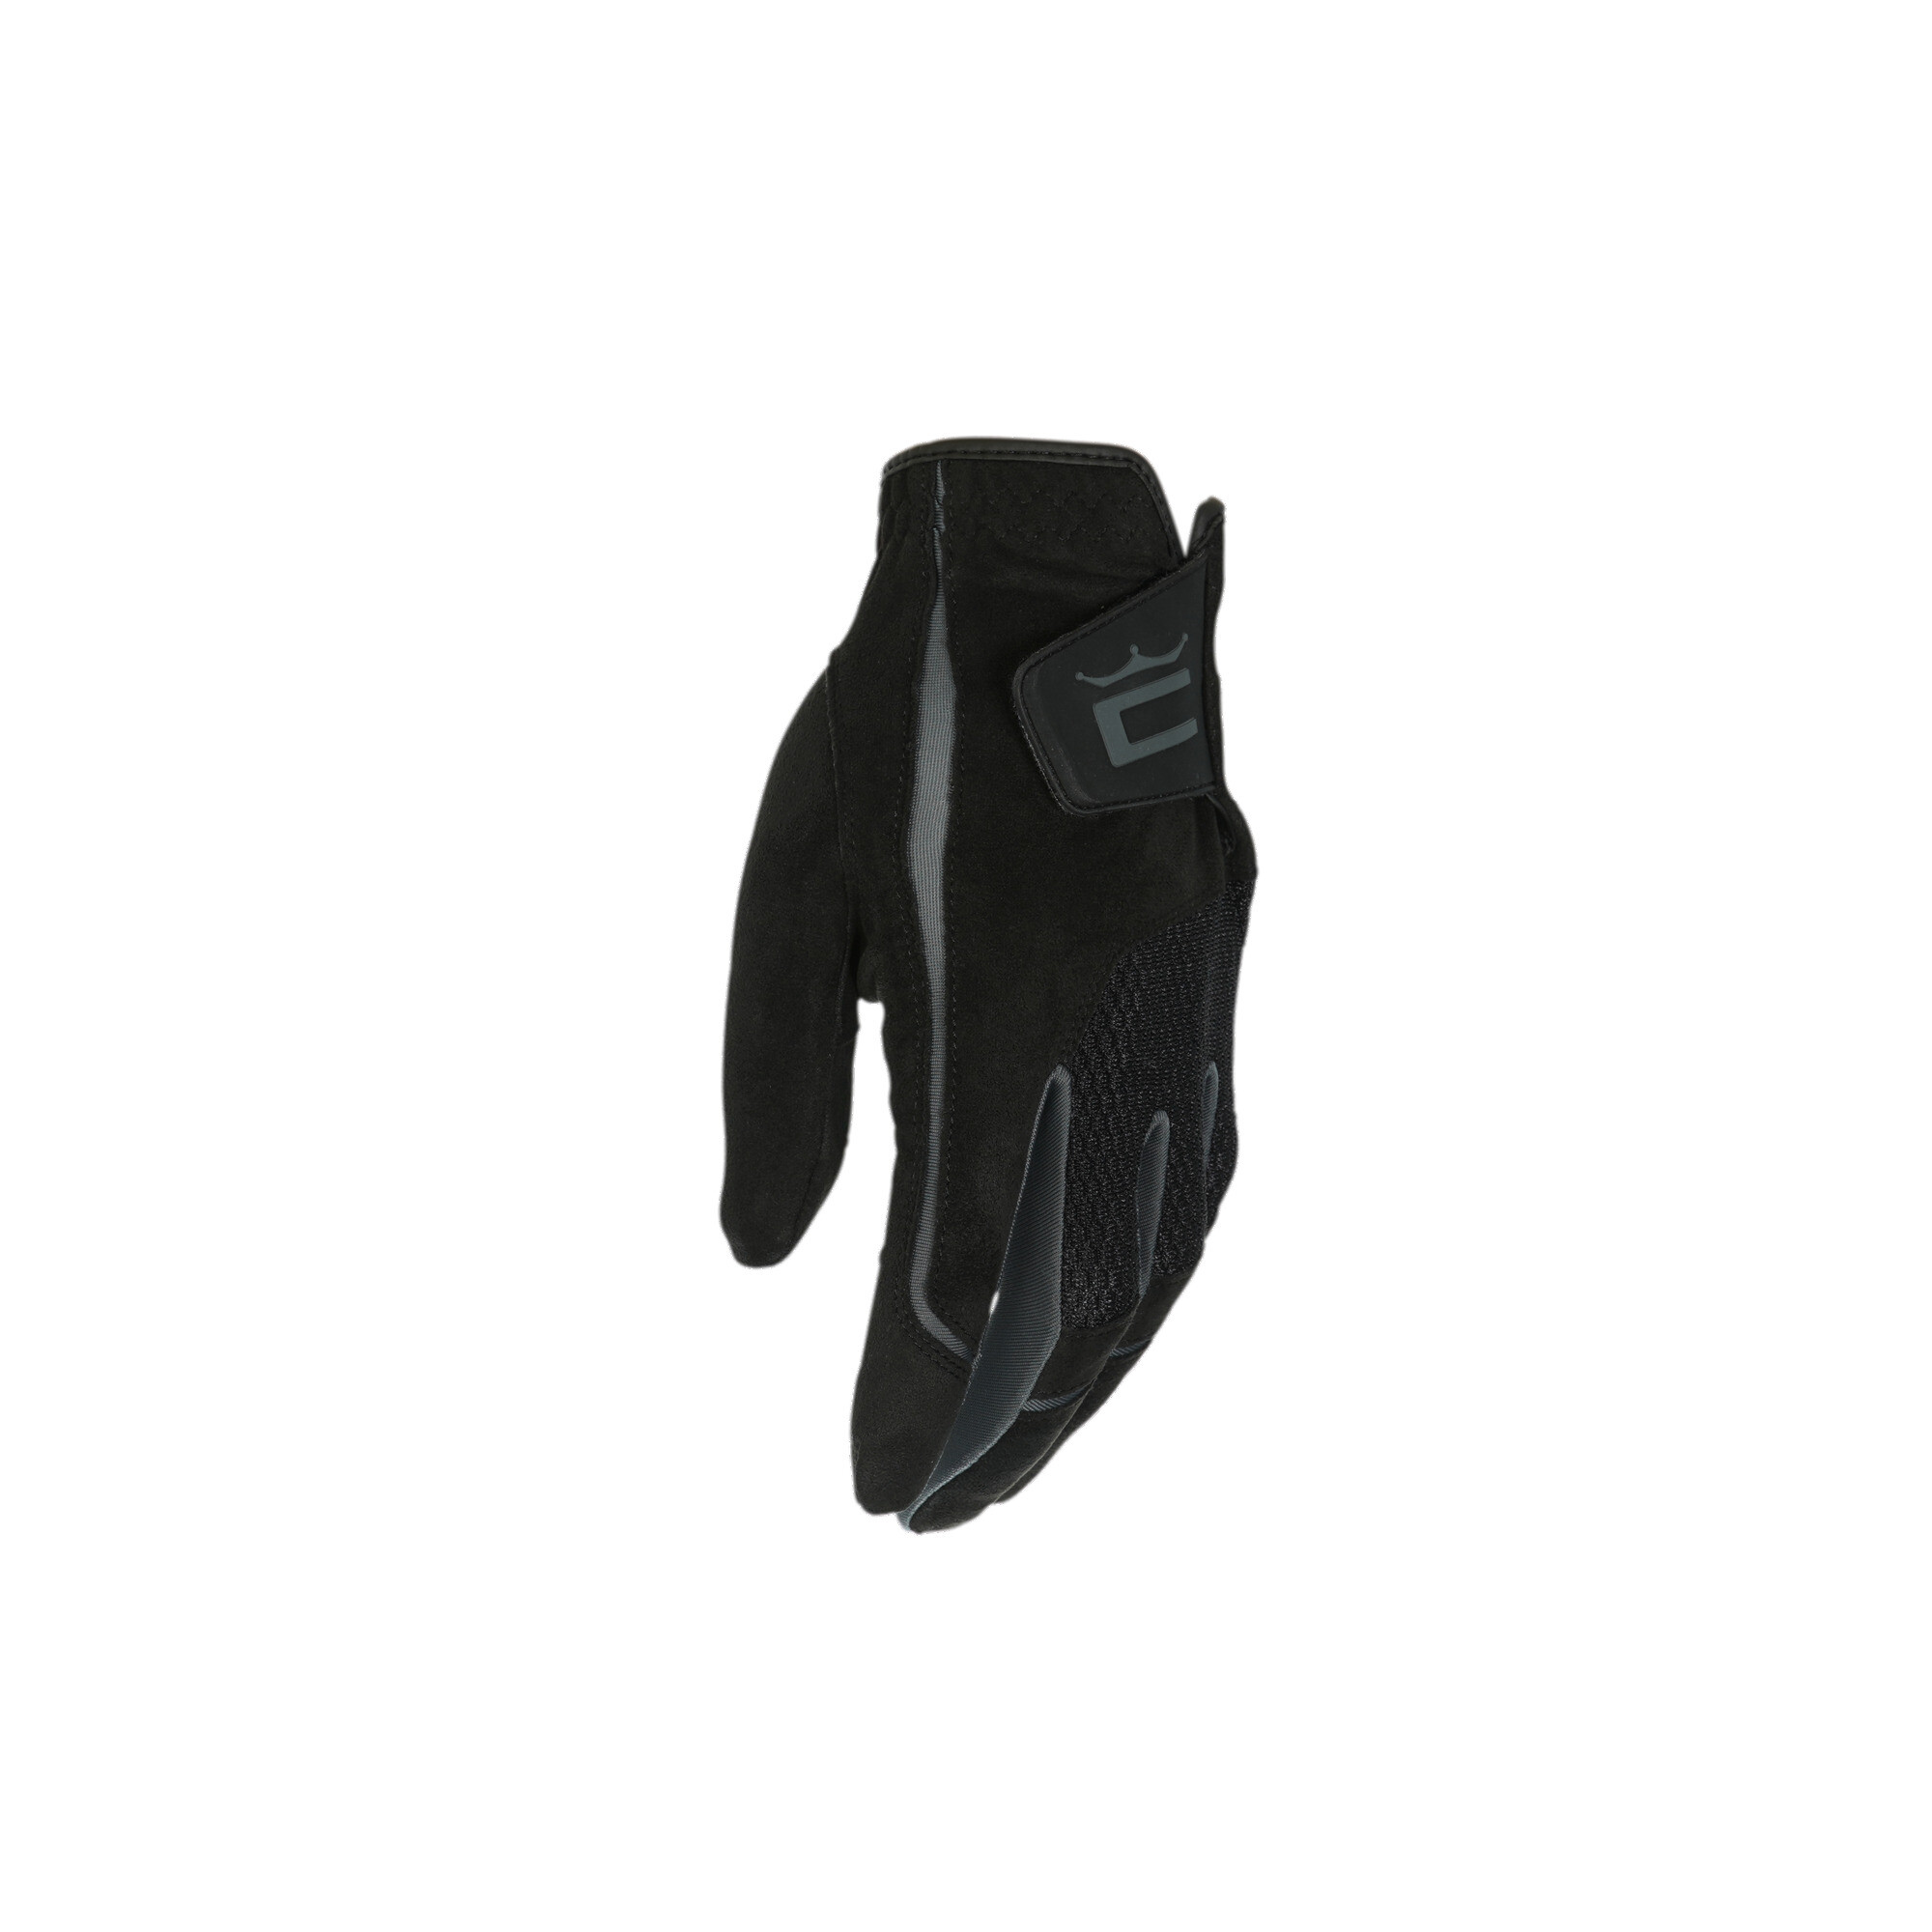 Men's Puma Storm Grip Rain Golf Gloves Pair 21, Black, Size M/L, Accessories